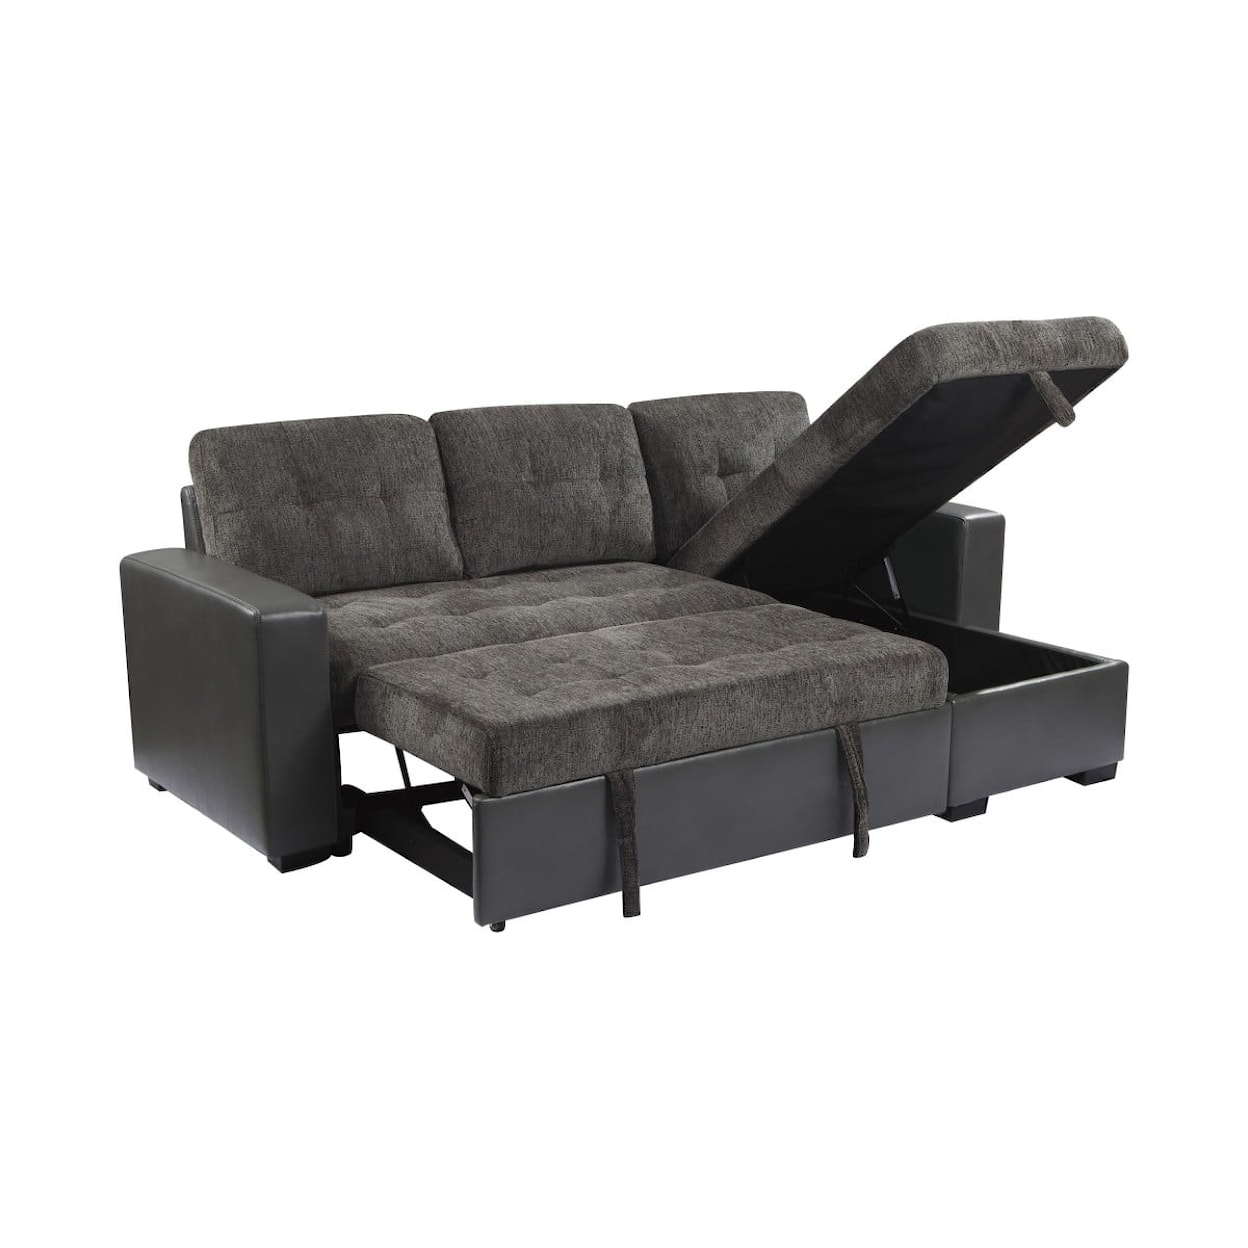 Homelegance Furniture Swallowtail 2-Piece Reversible Sectional Sofa